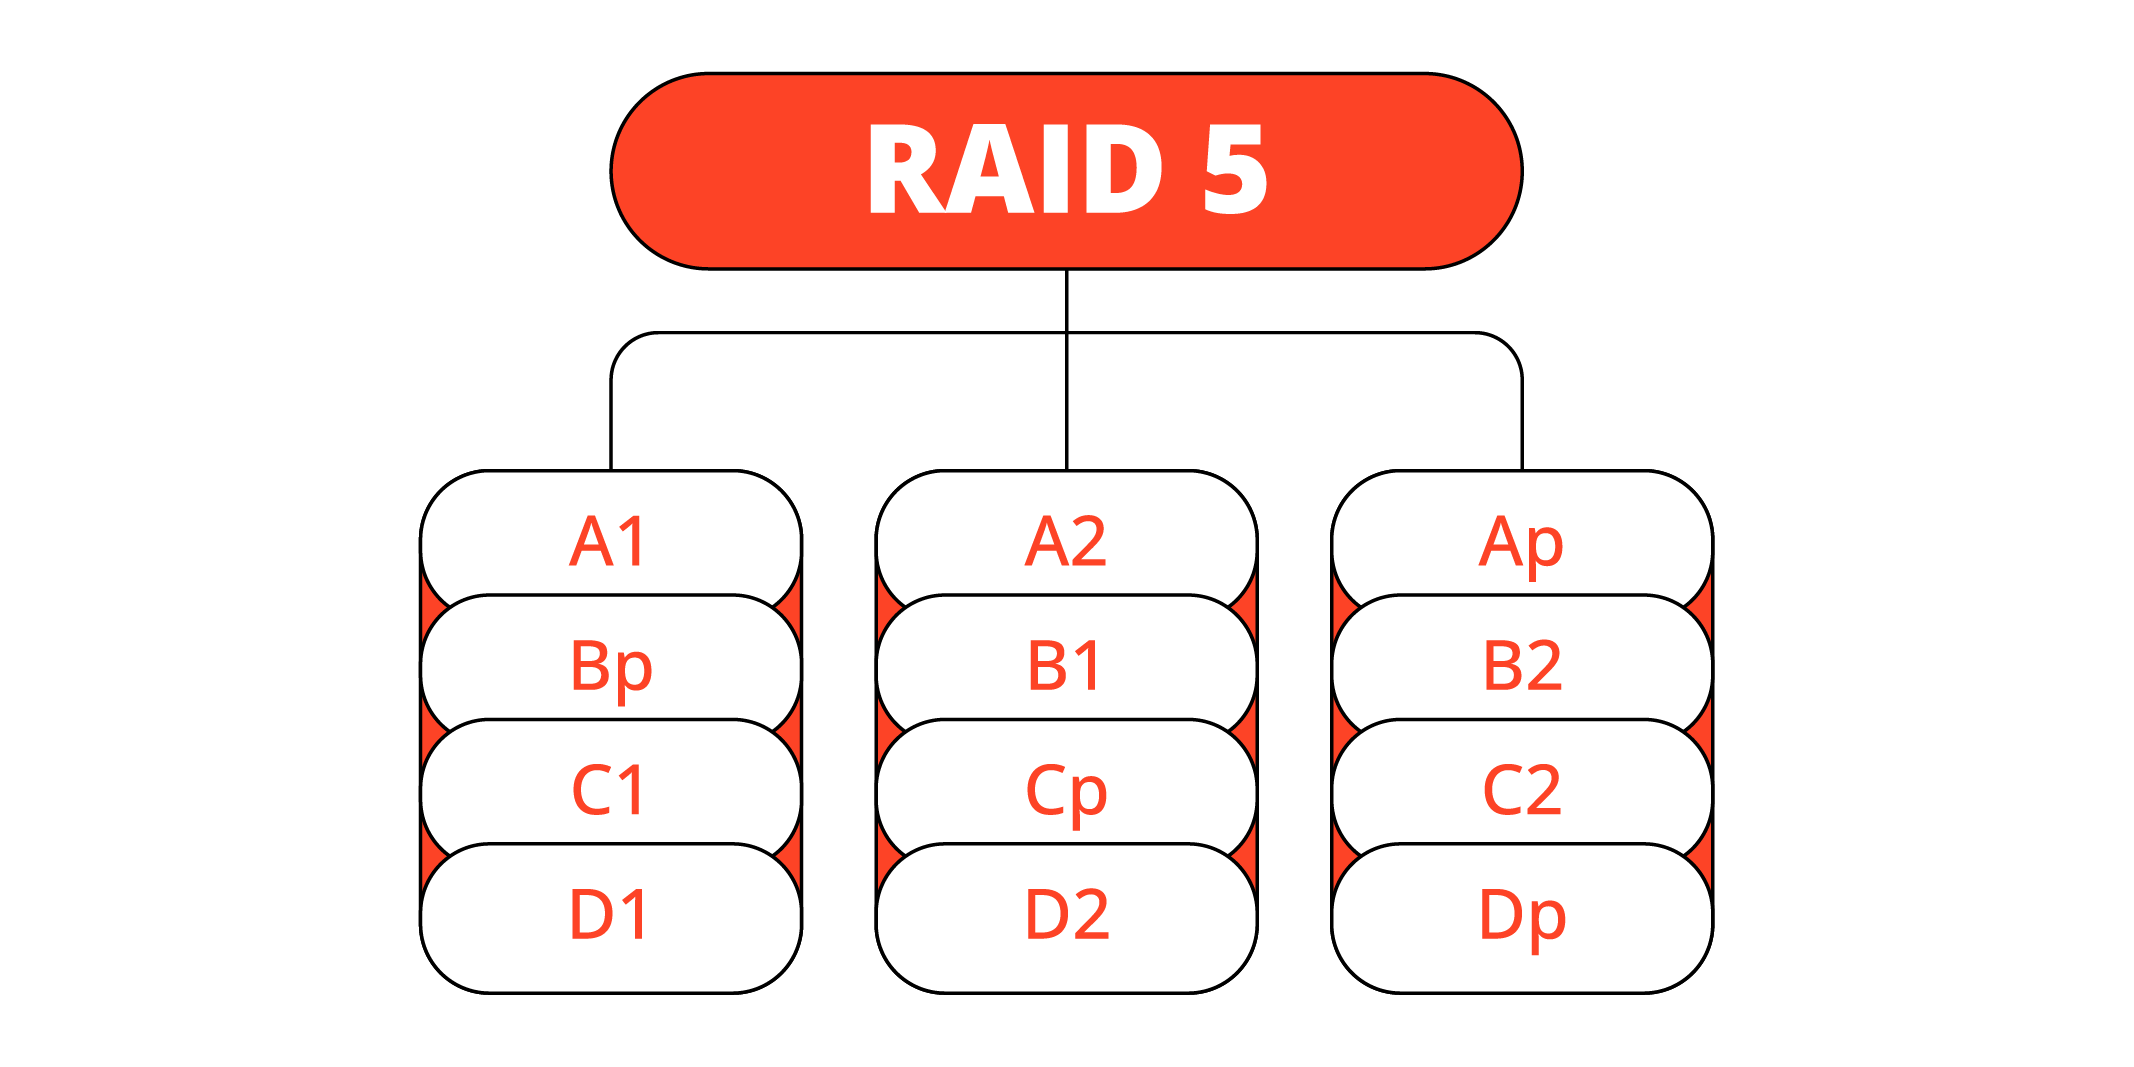 RAID 5 Data Recovery